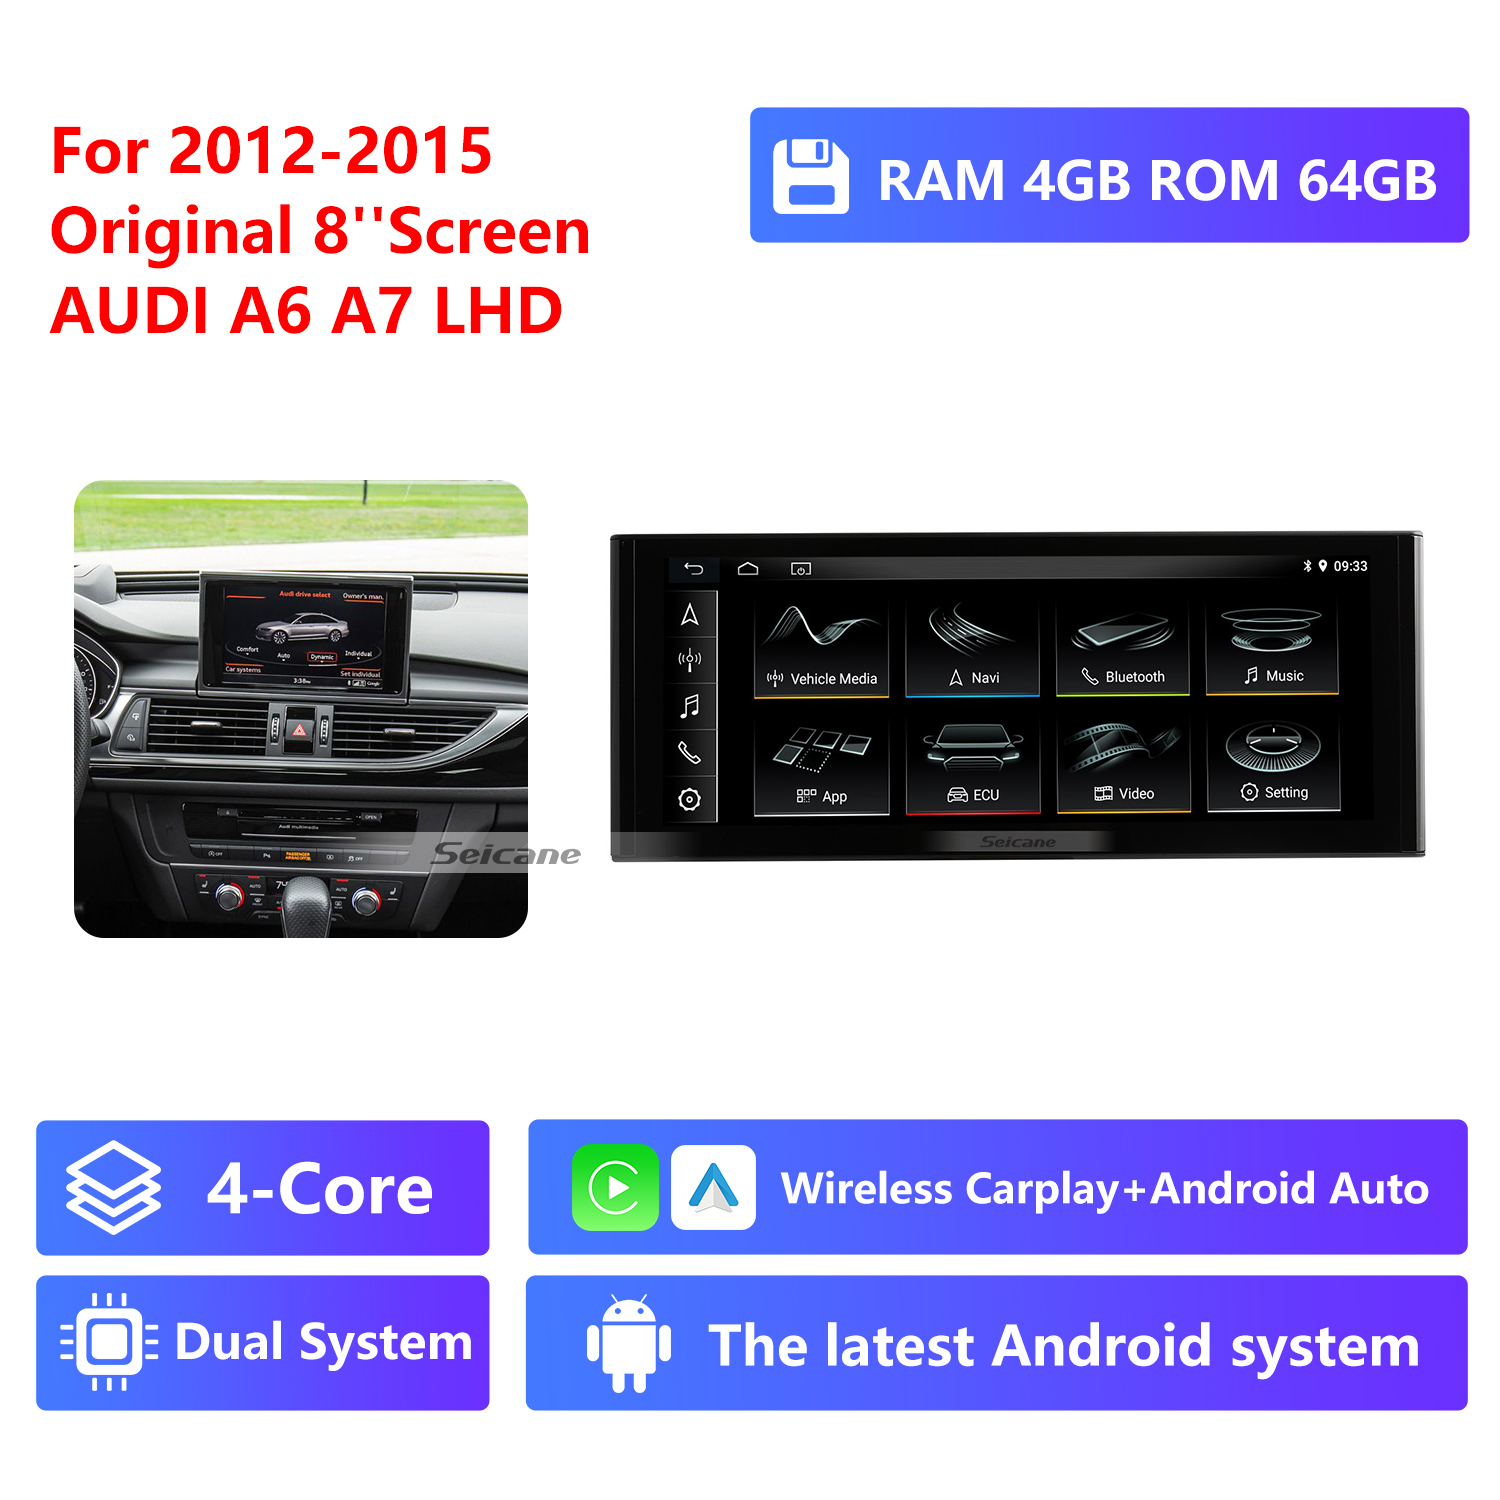 4-Core RAM 4G ROM 64G,2012-2015, Original 8"Screen,LHD